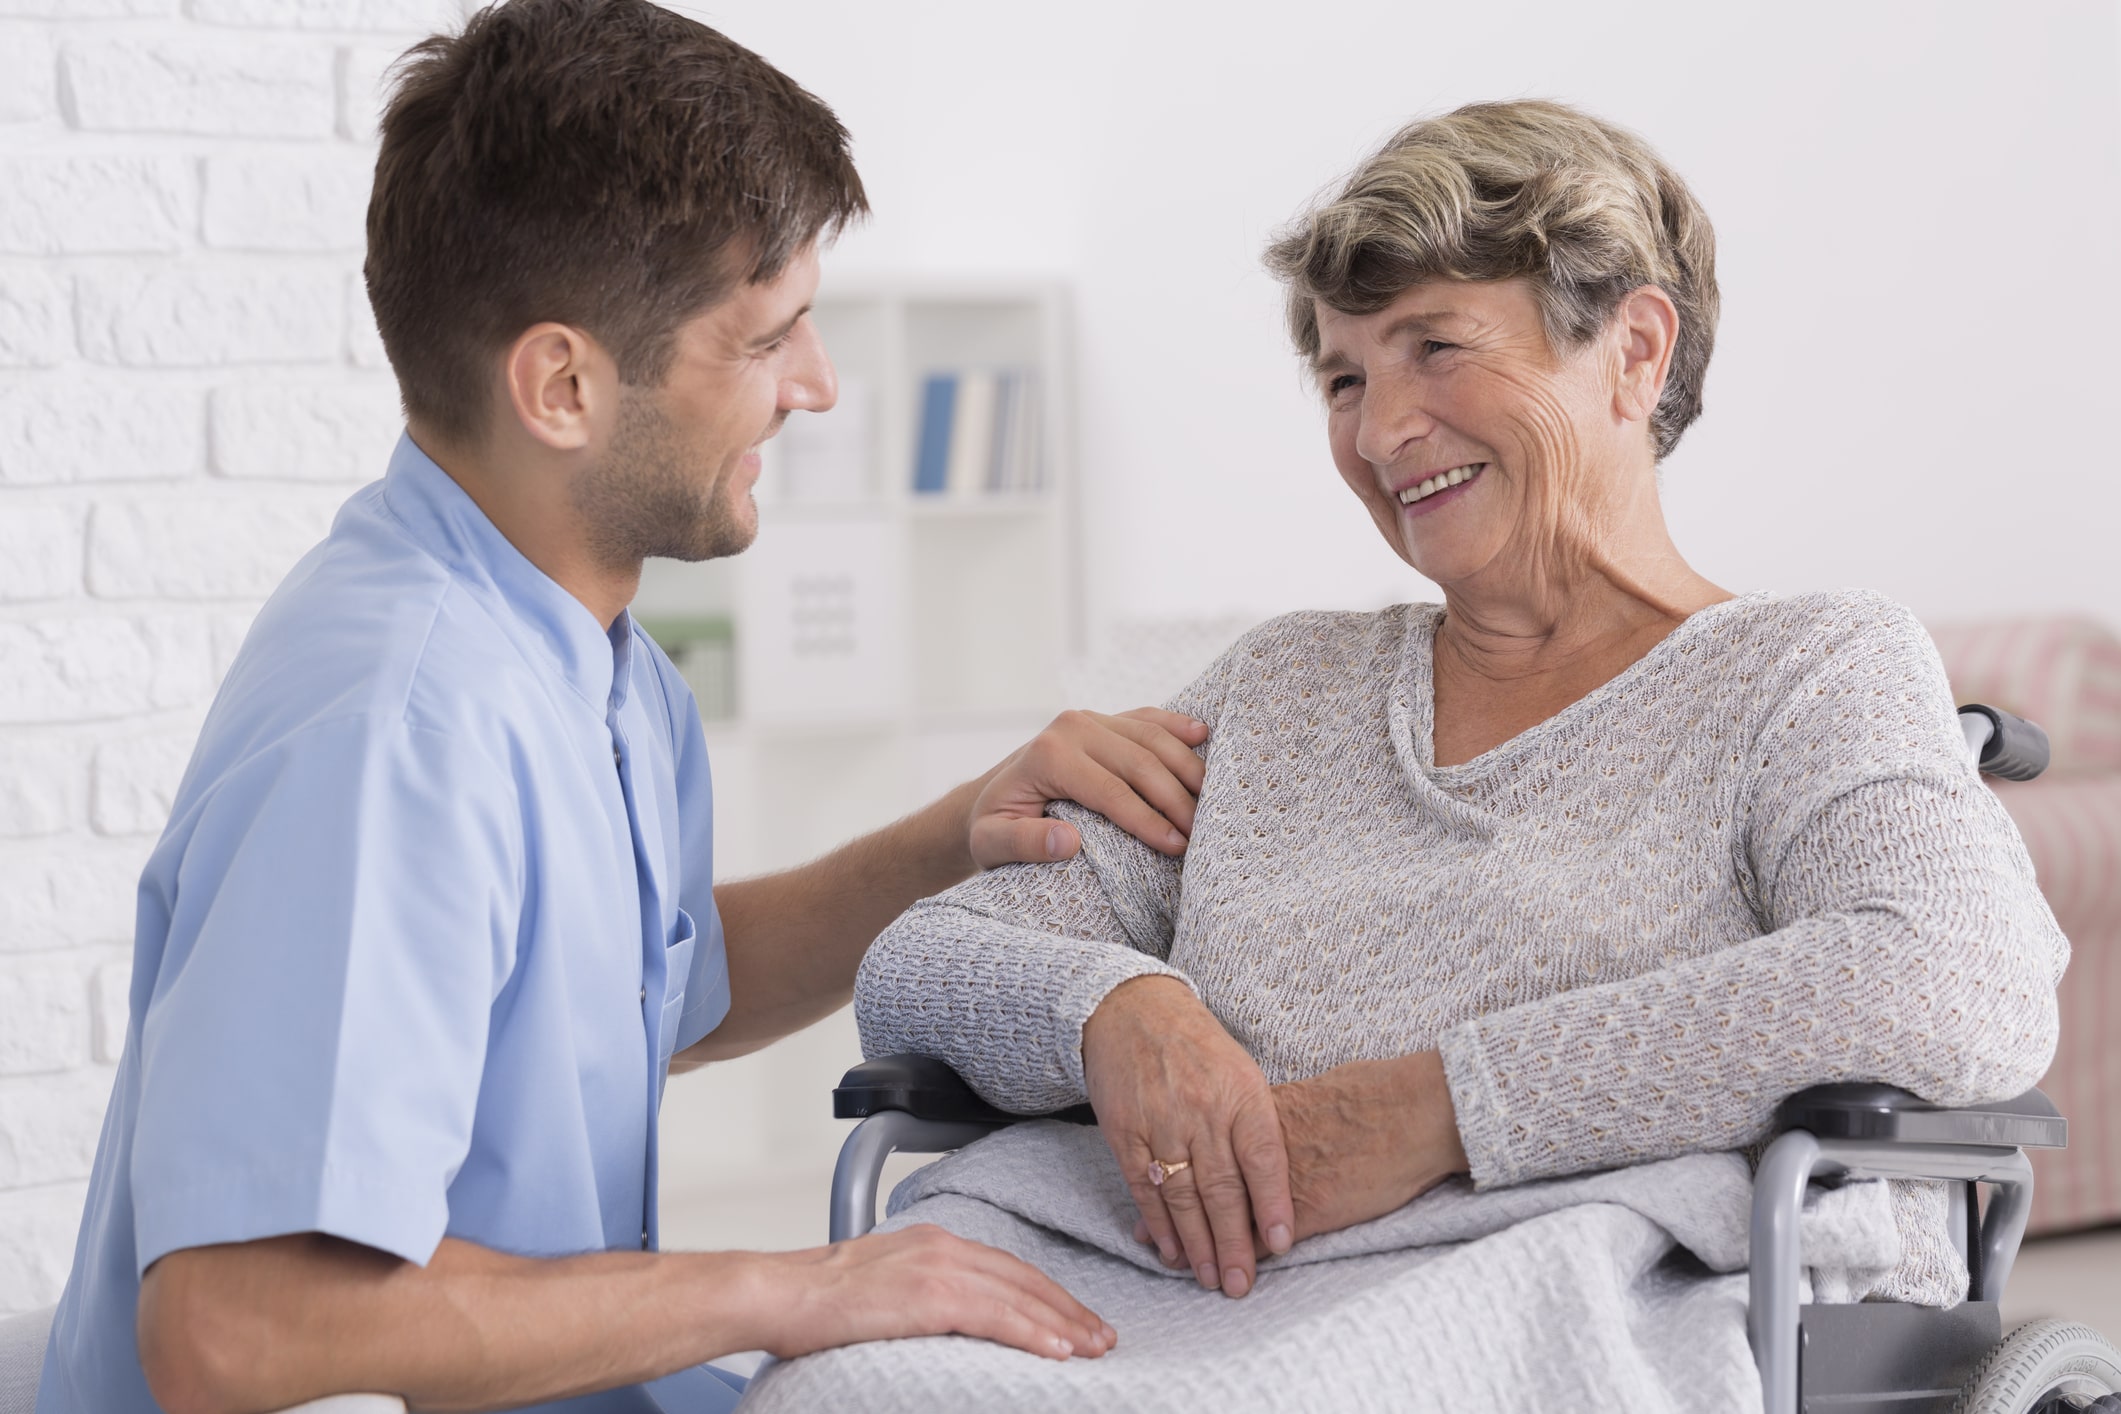 Nurse speaking with a patient in wheelchair